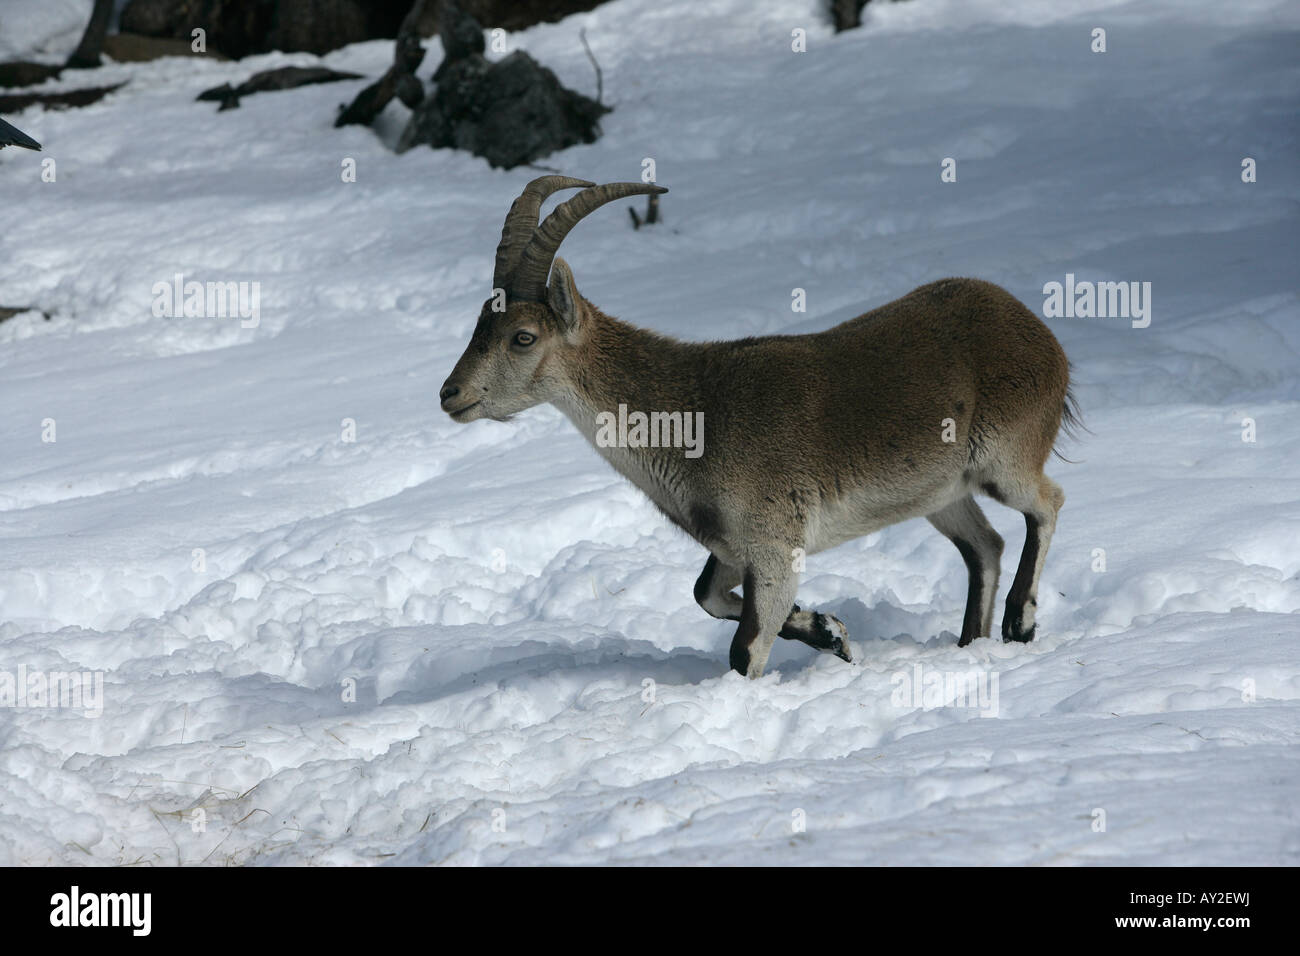 Spanish or Iberian ibex Capra pyrenaica Spain winter Stock Photo